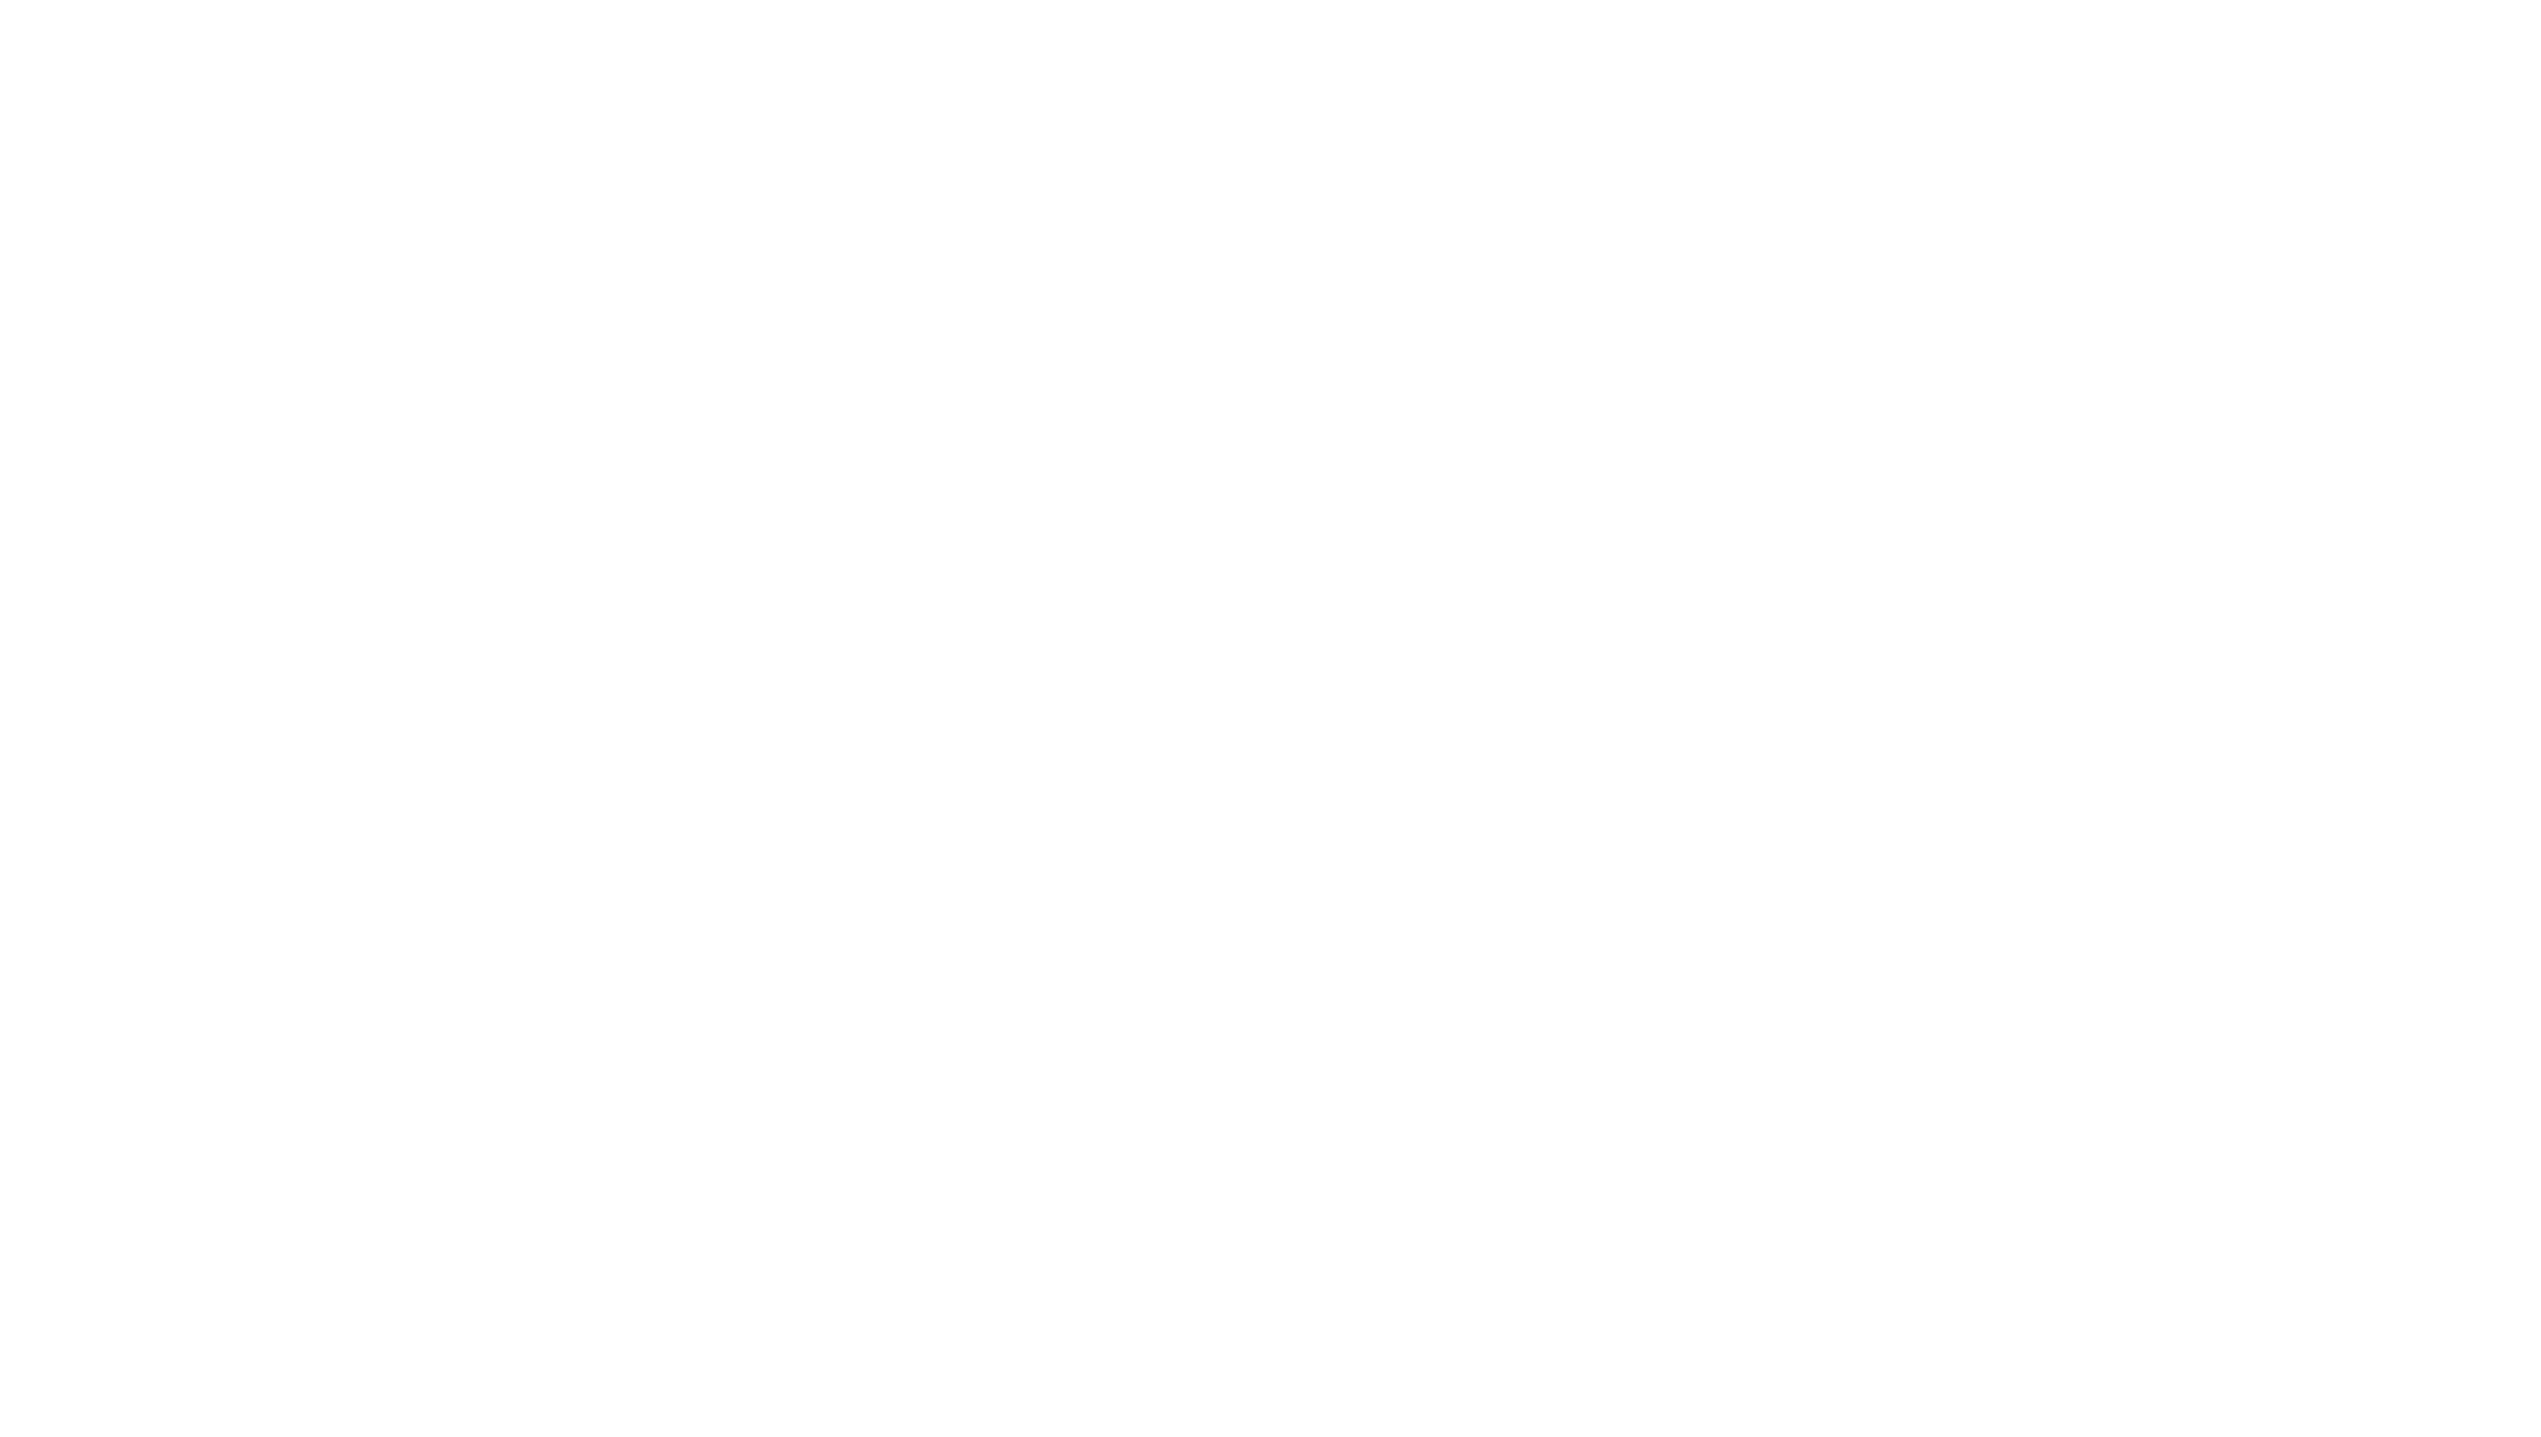 logo_sigma